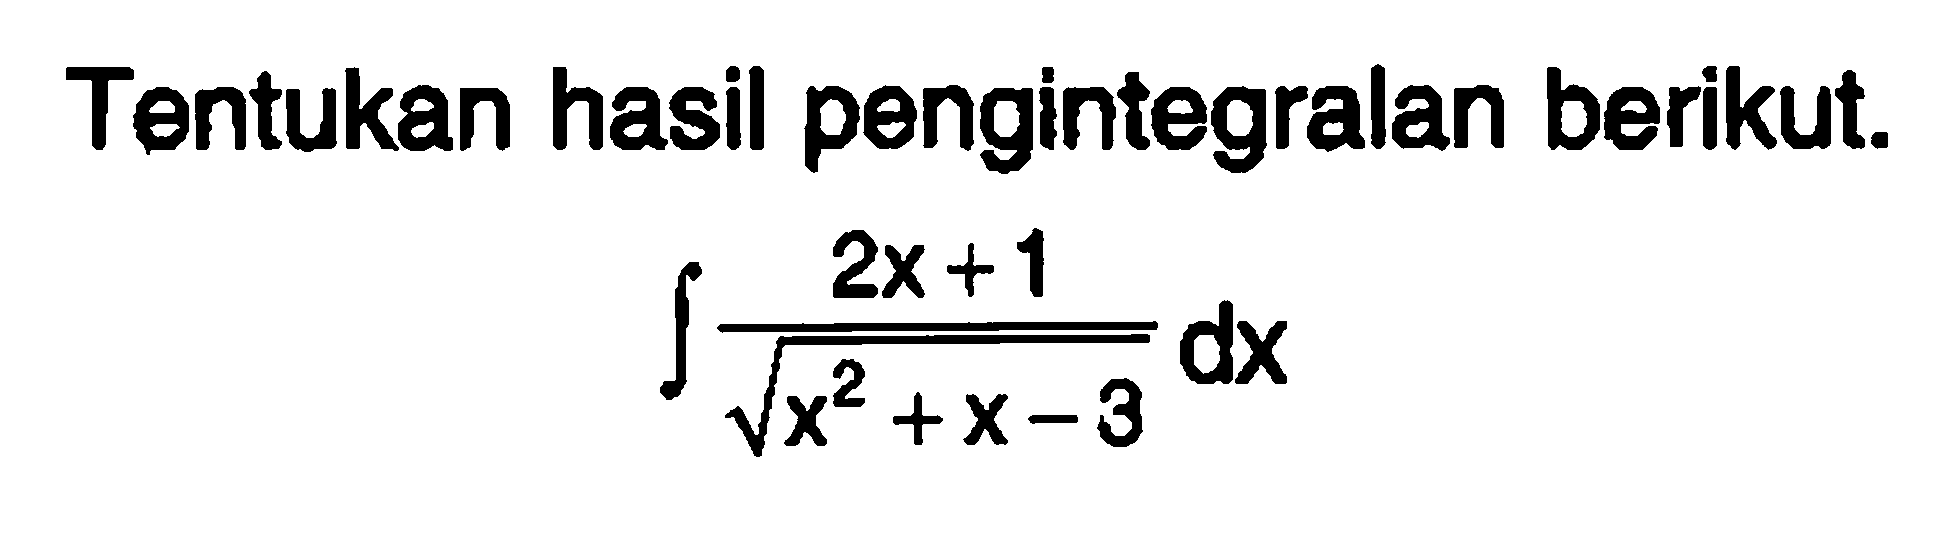 Tentukan hasil pengintegralan berikut. integral (2x+1)/akar(x^2+x-3) dx